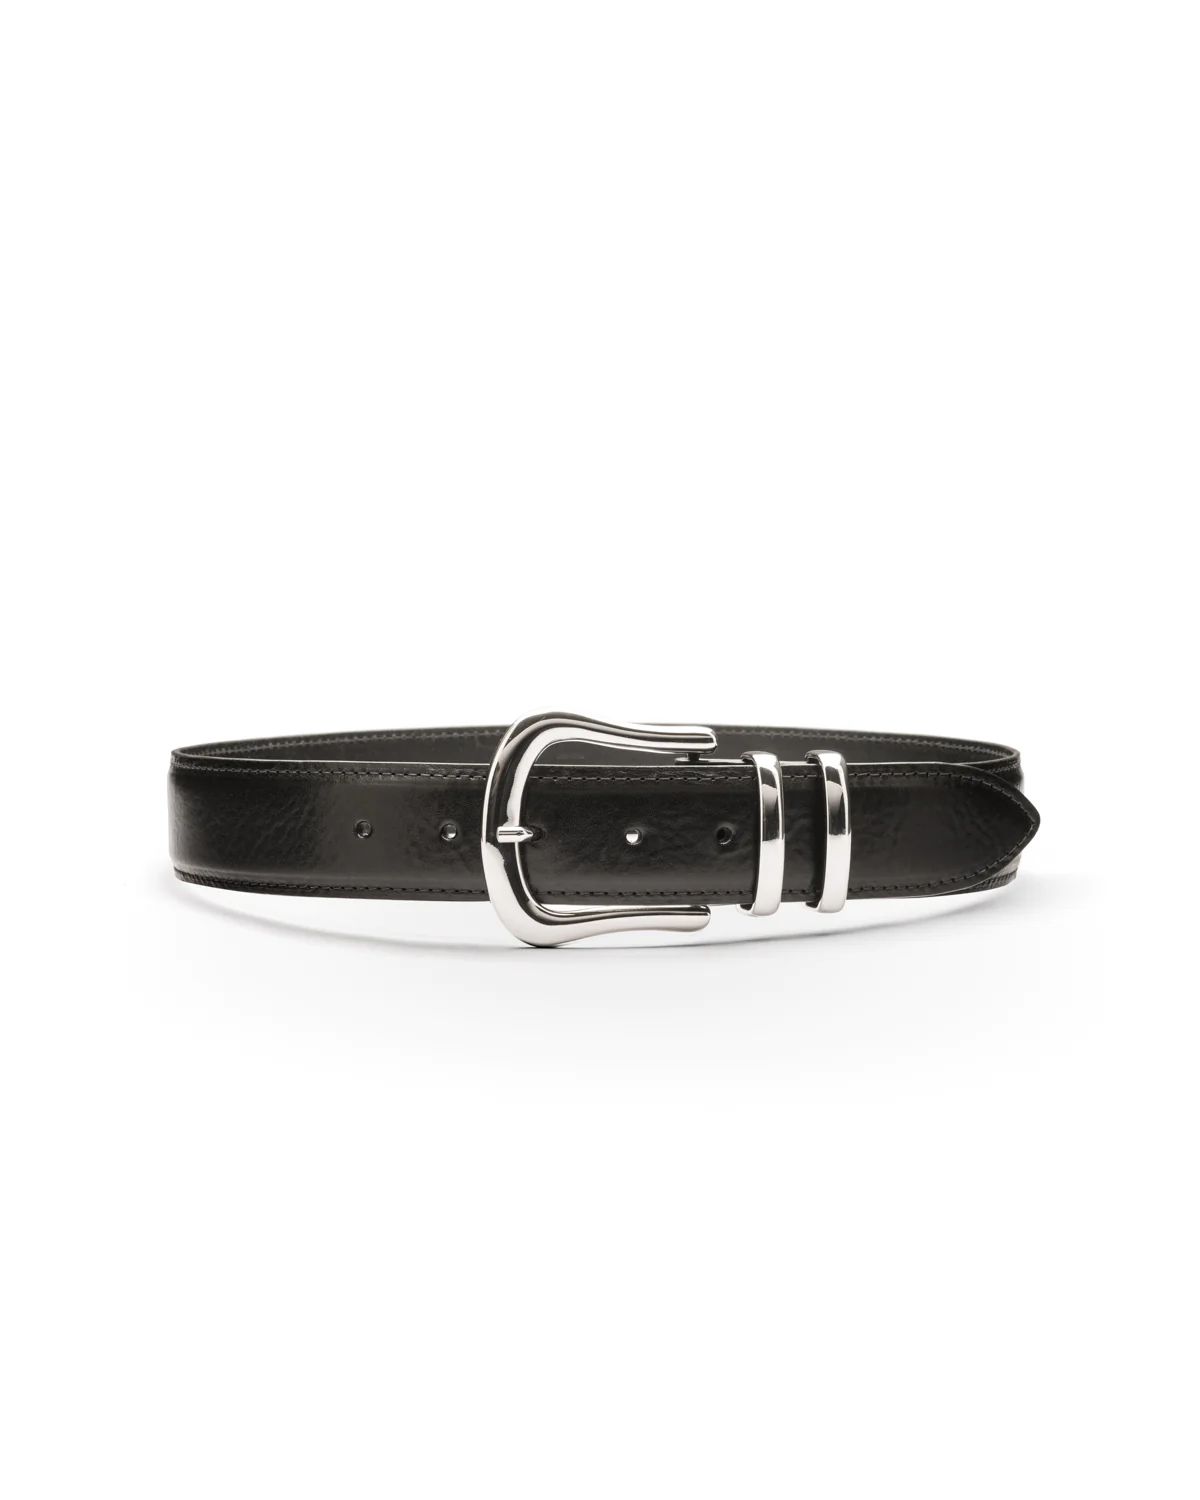 Marina silver buckle leather waist belt | Black & Brown London